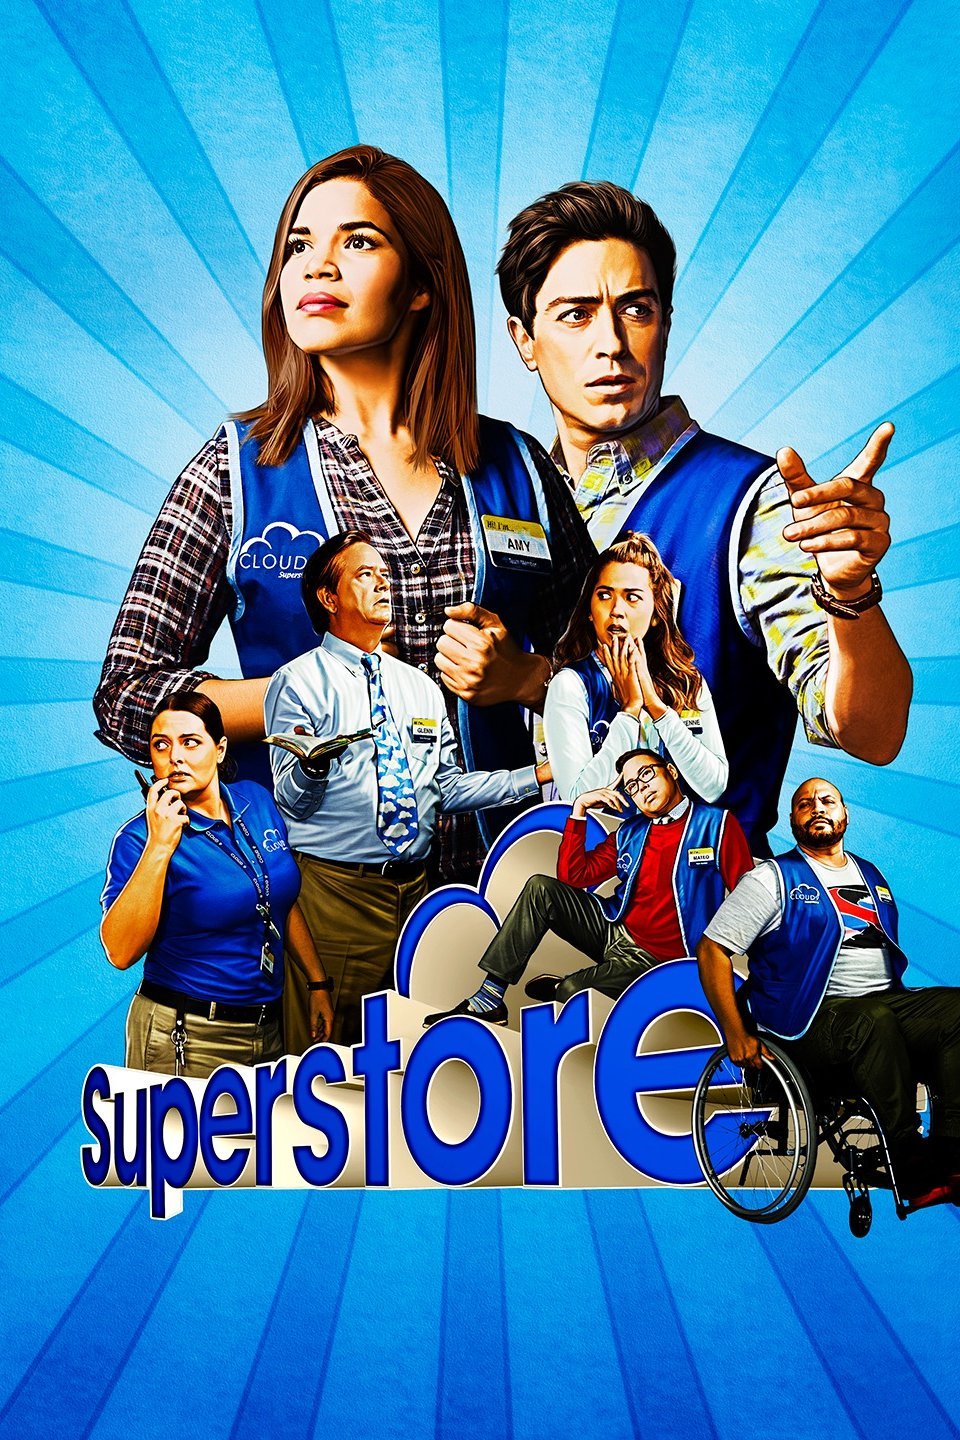 Superstore (season 2) - Wikipedia